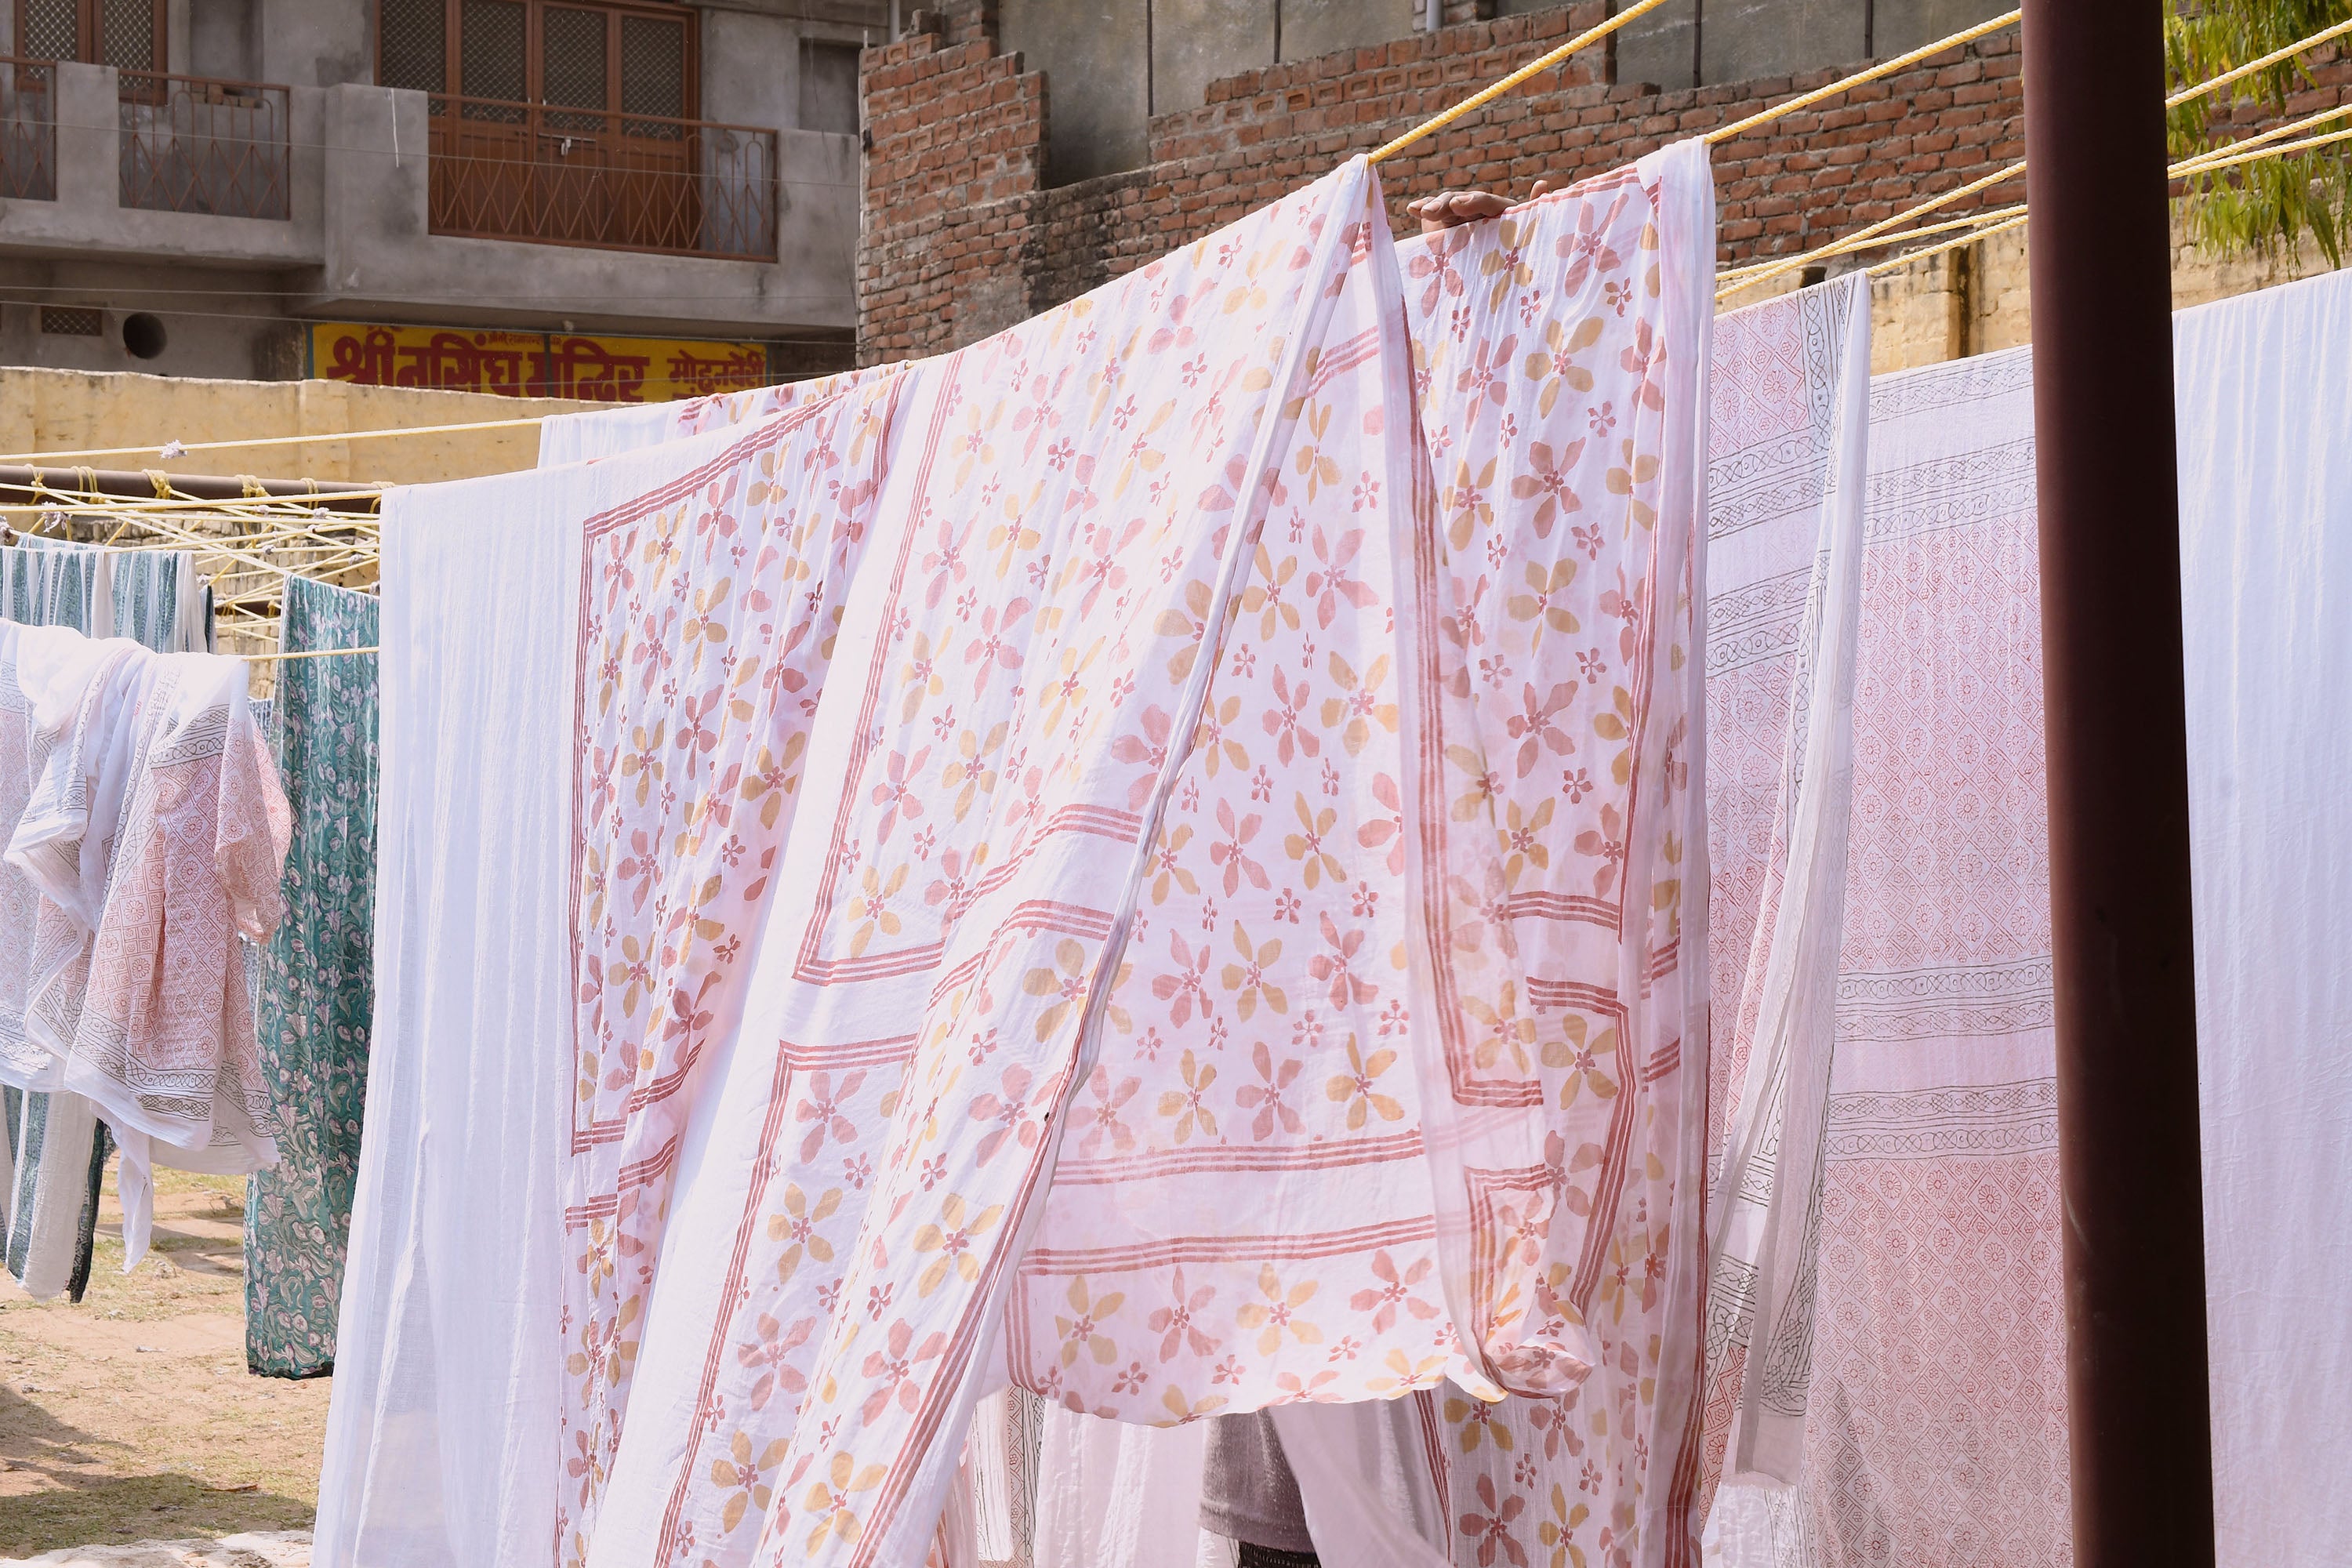 The Capri bandana printed fabric drying outside